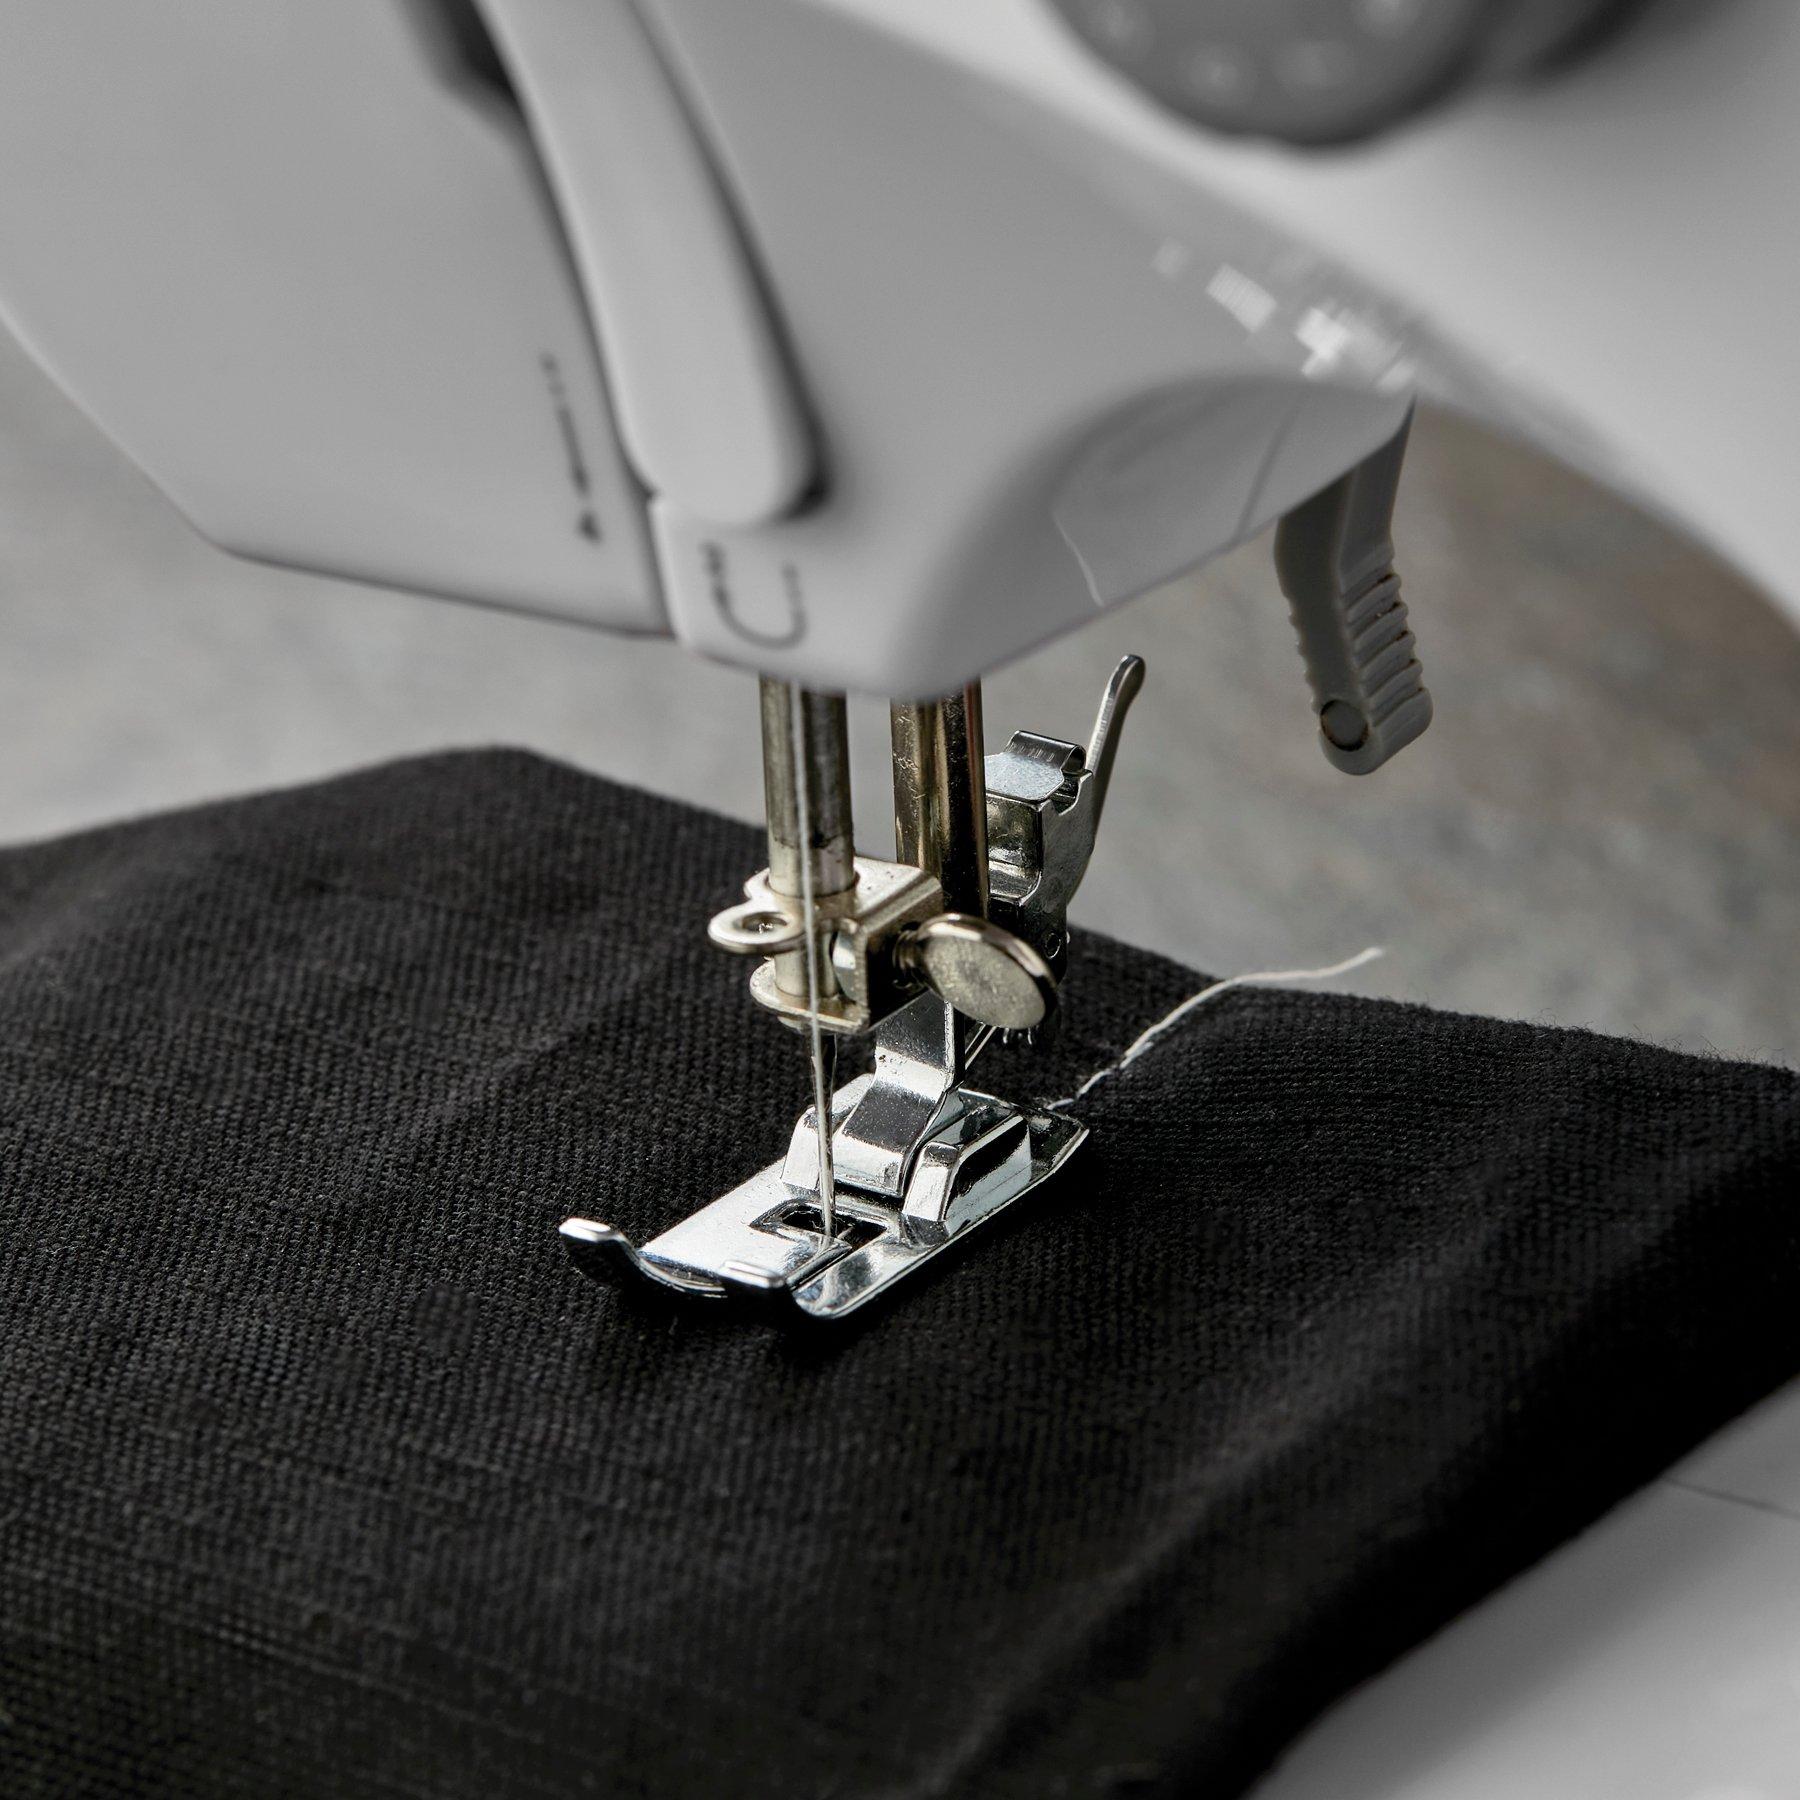 EGL Sewing Machine with Starter Kit